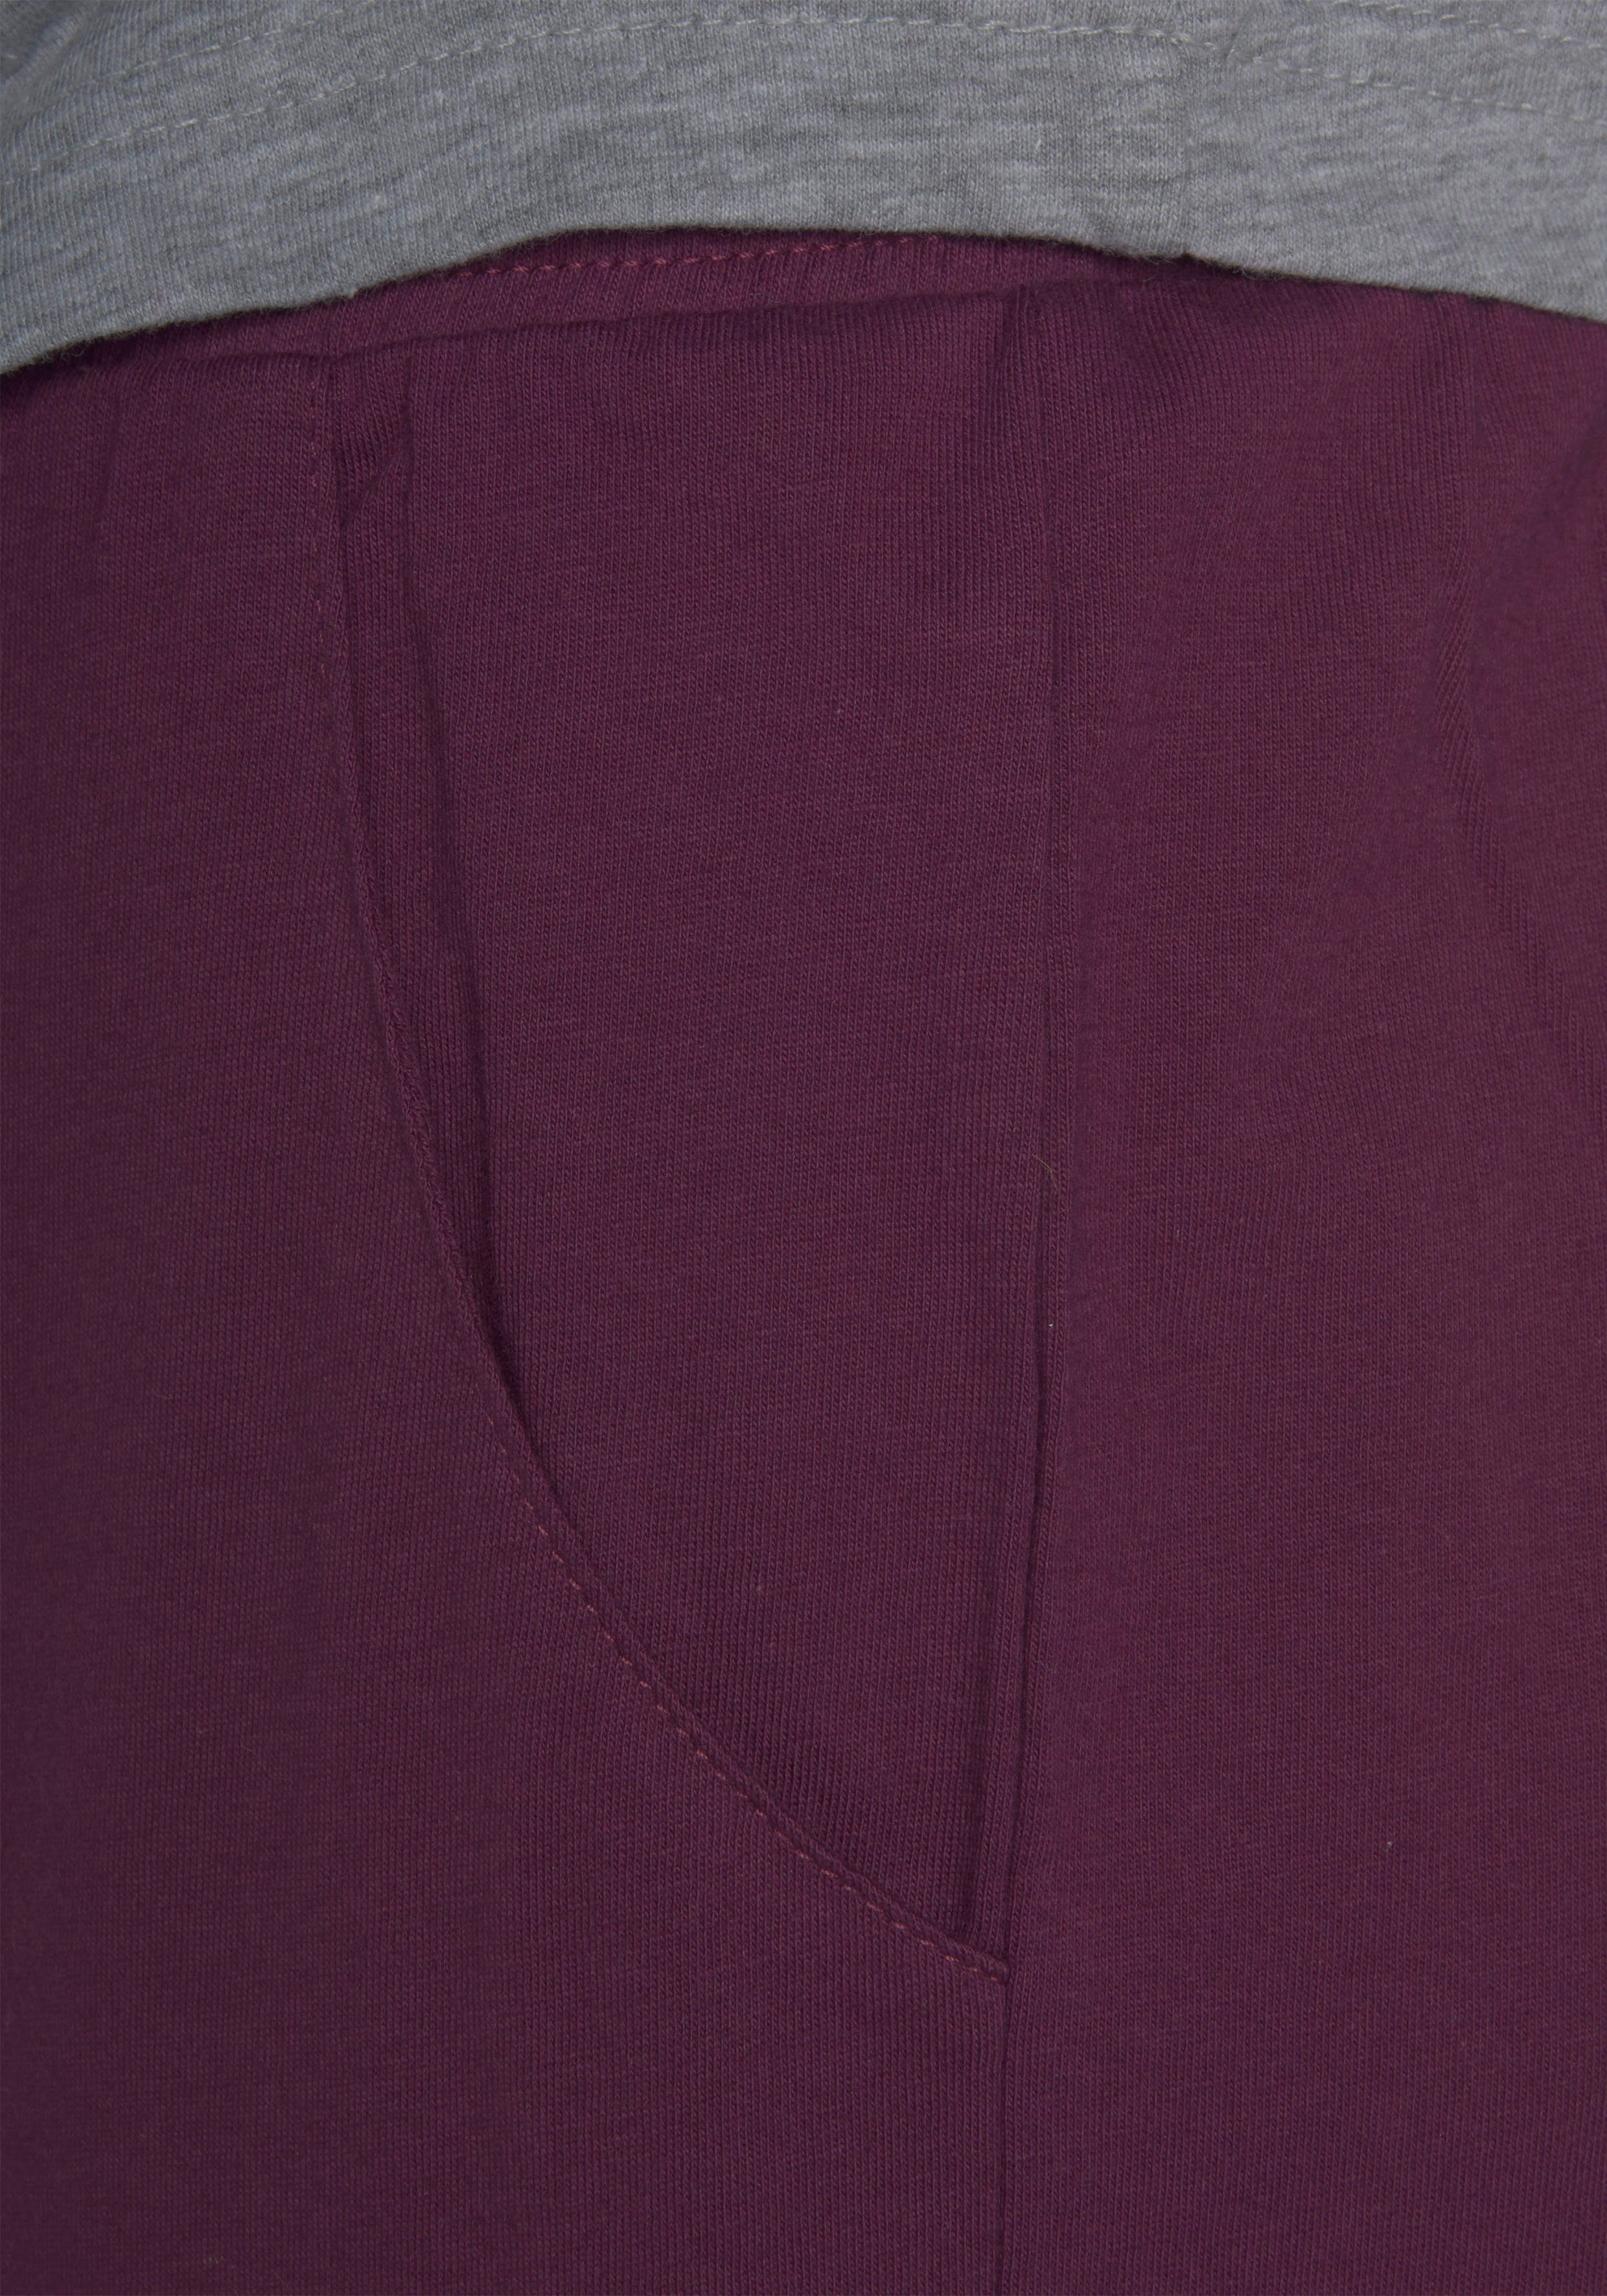 Pyjama kontrastfarbenen (2 Stück) 1 mit tlg., Raglanärmeln KangaROOS bordeaux-grau-meliert